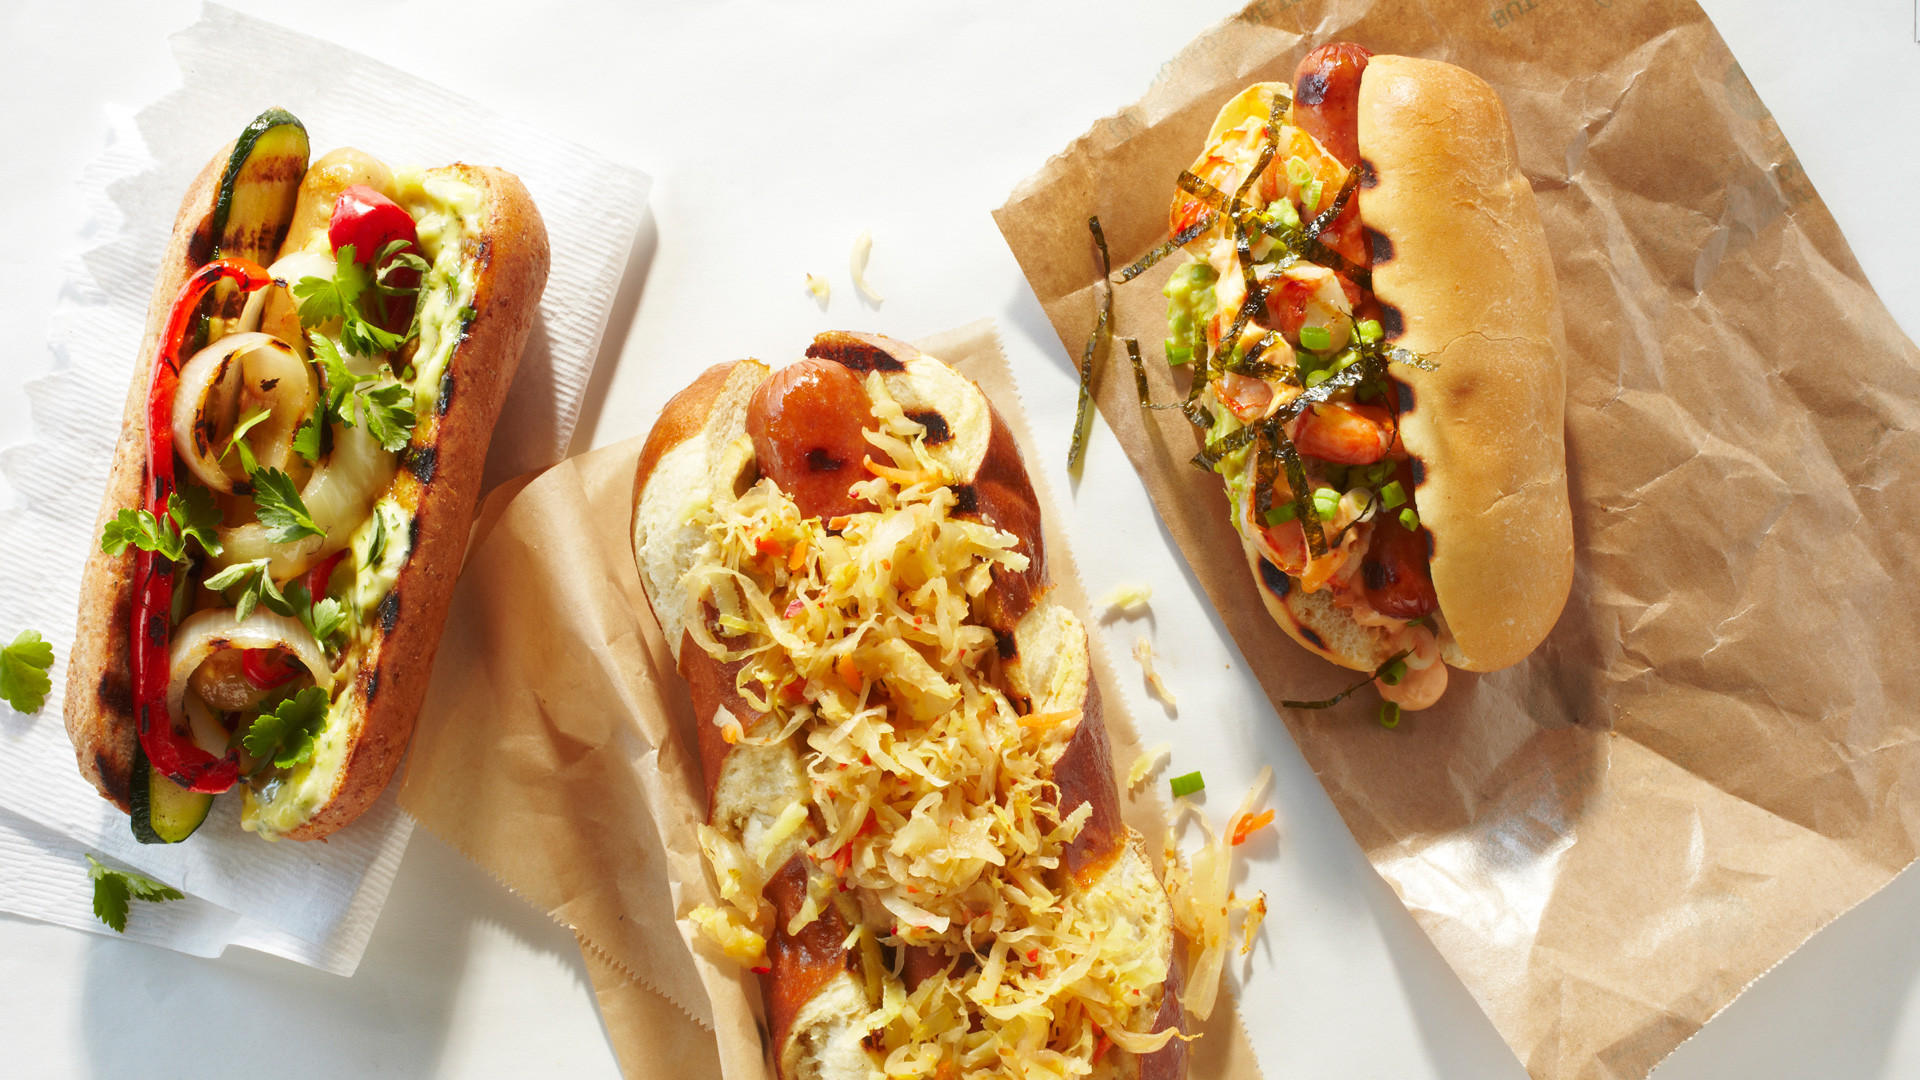 Gourmet Hot Dogs
 Hot dogs go gourmet